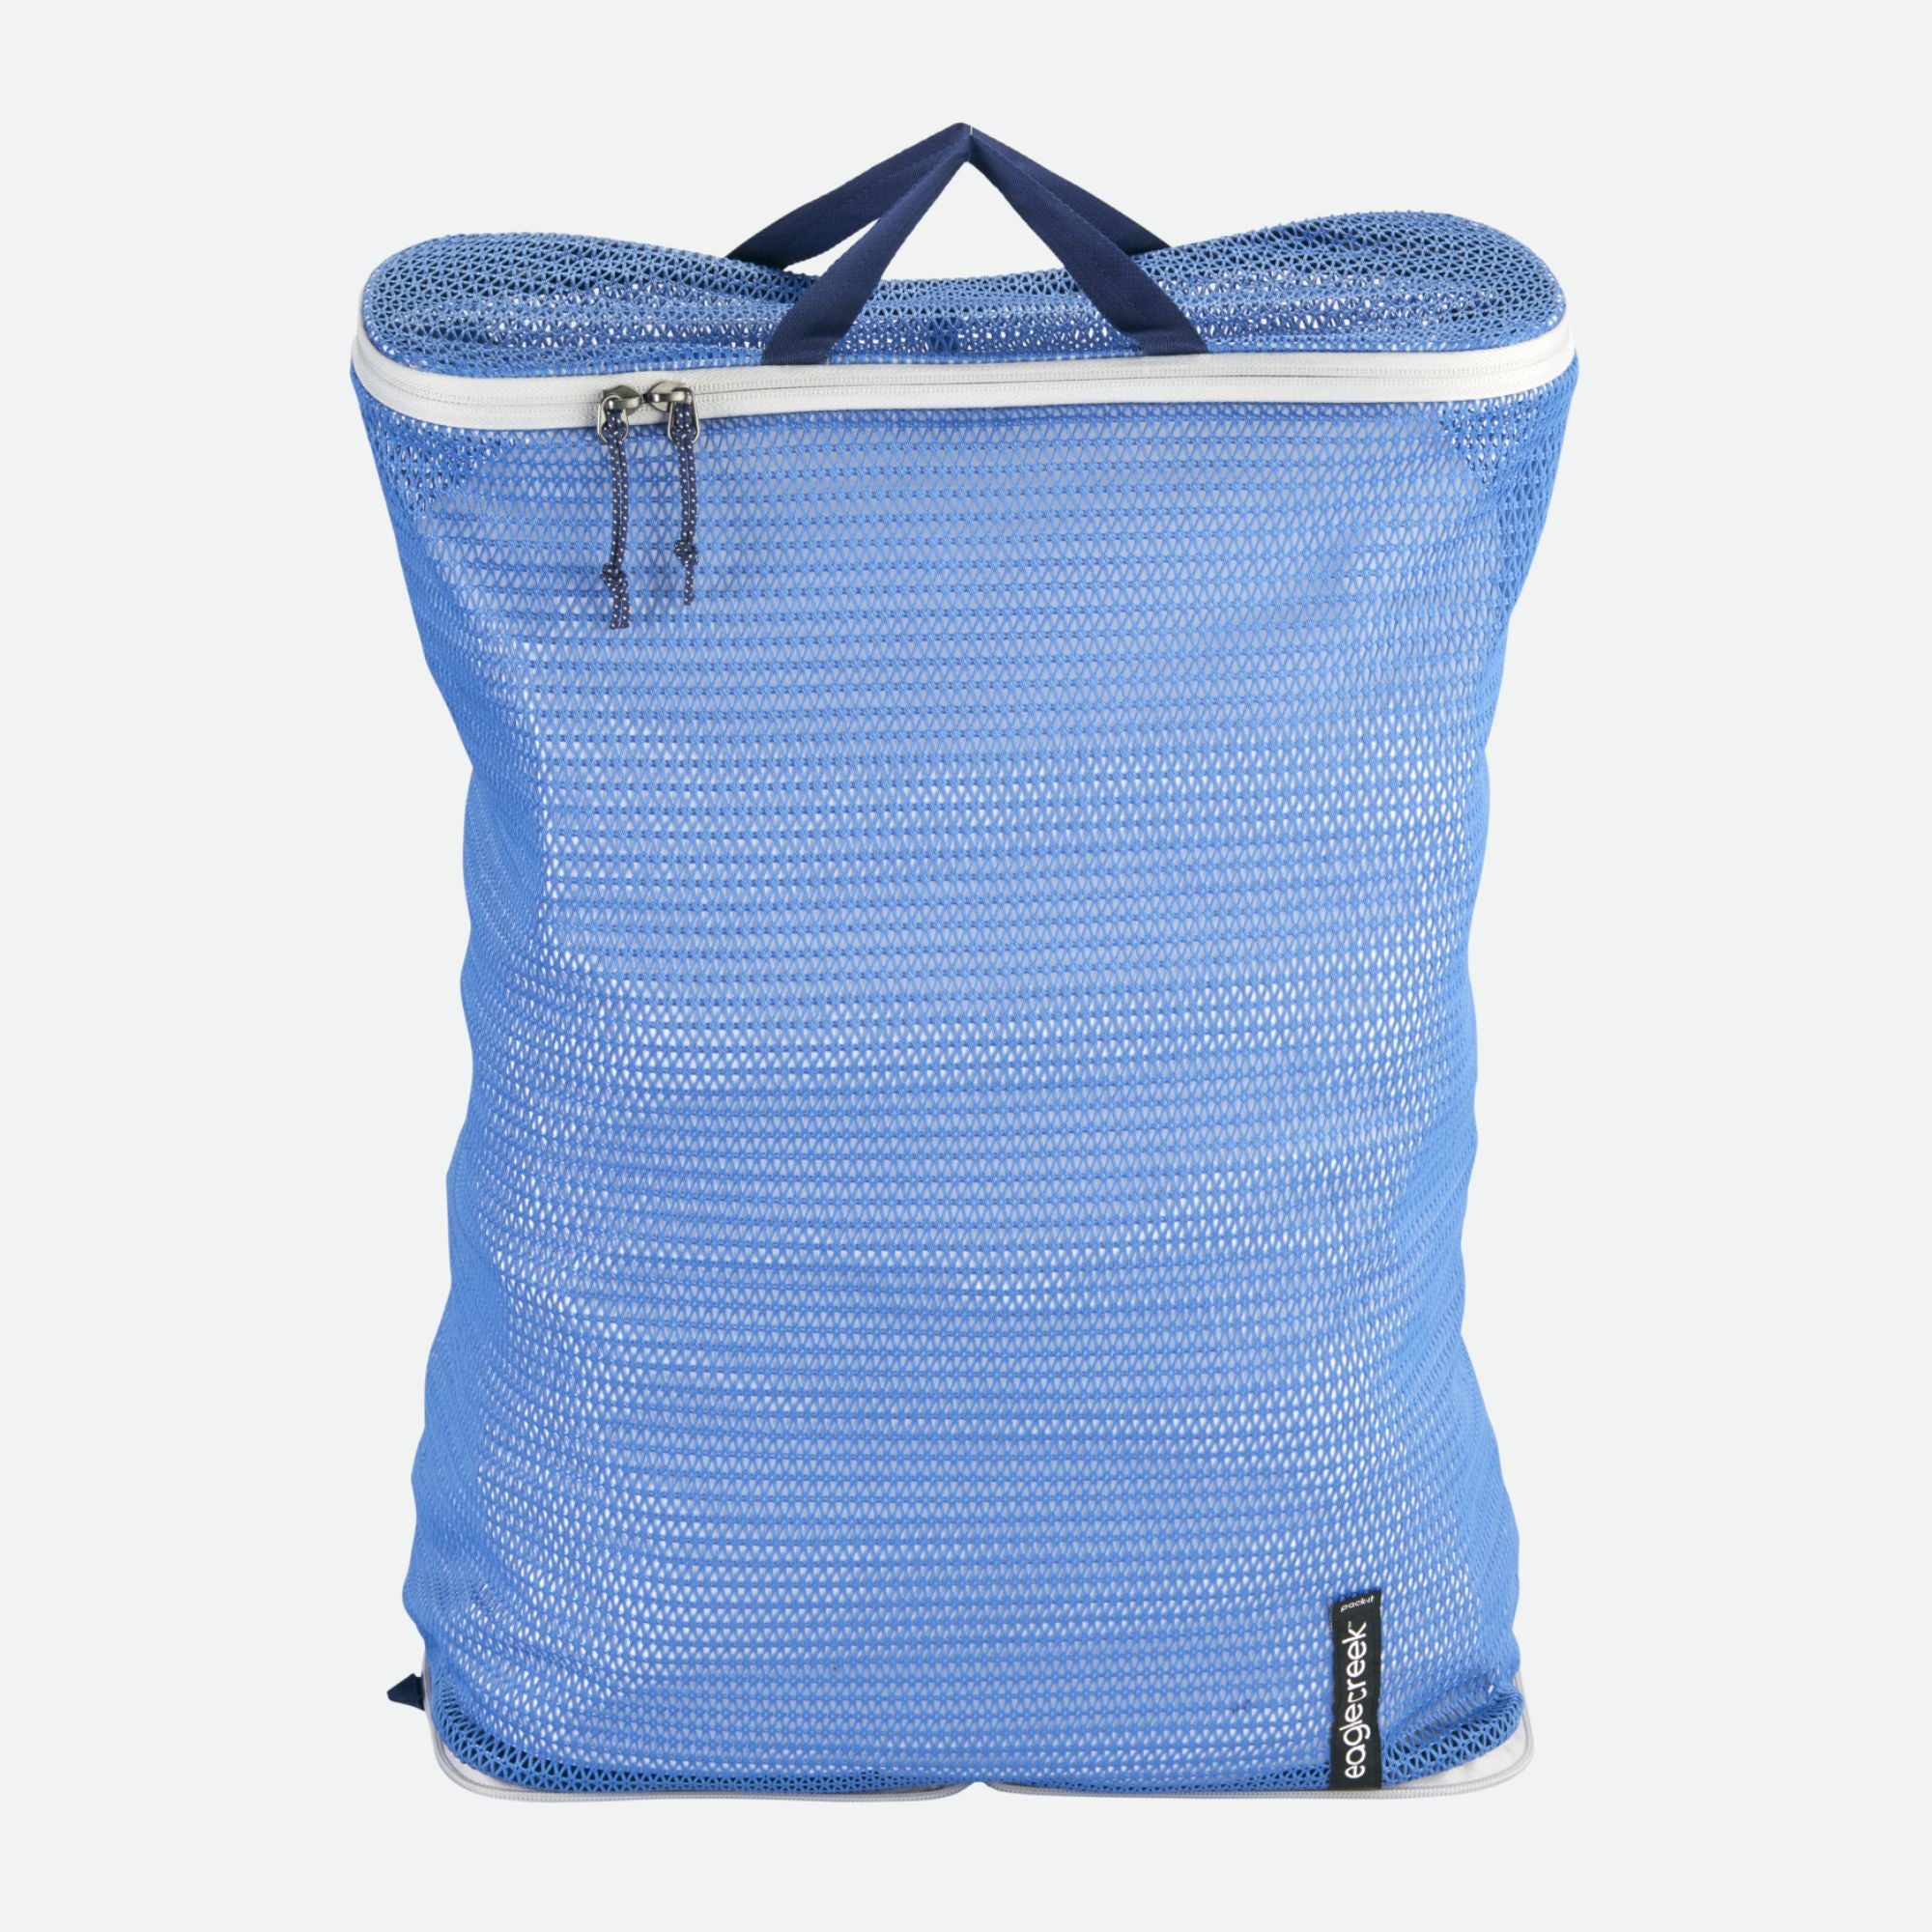 Pack-It™ Reveal Laundry Sac Az Blue/Grey